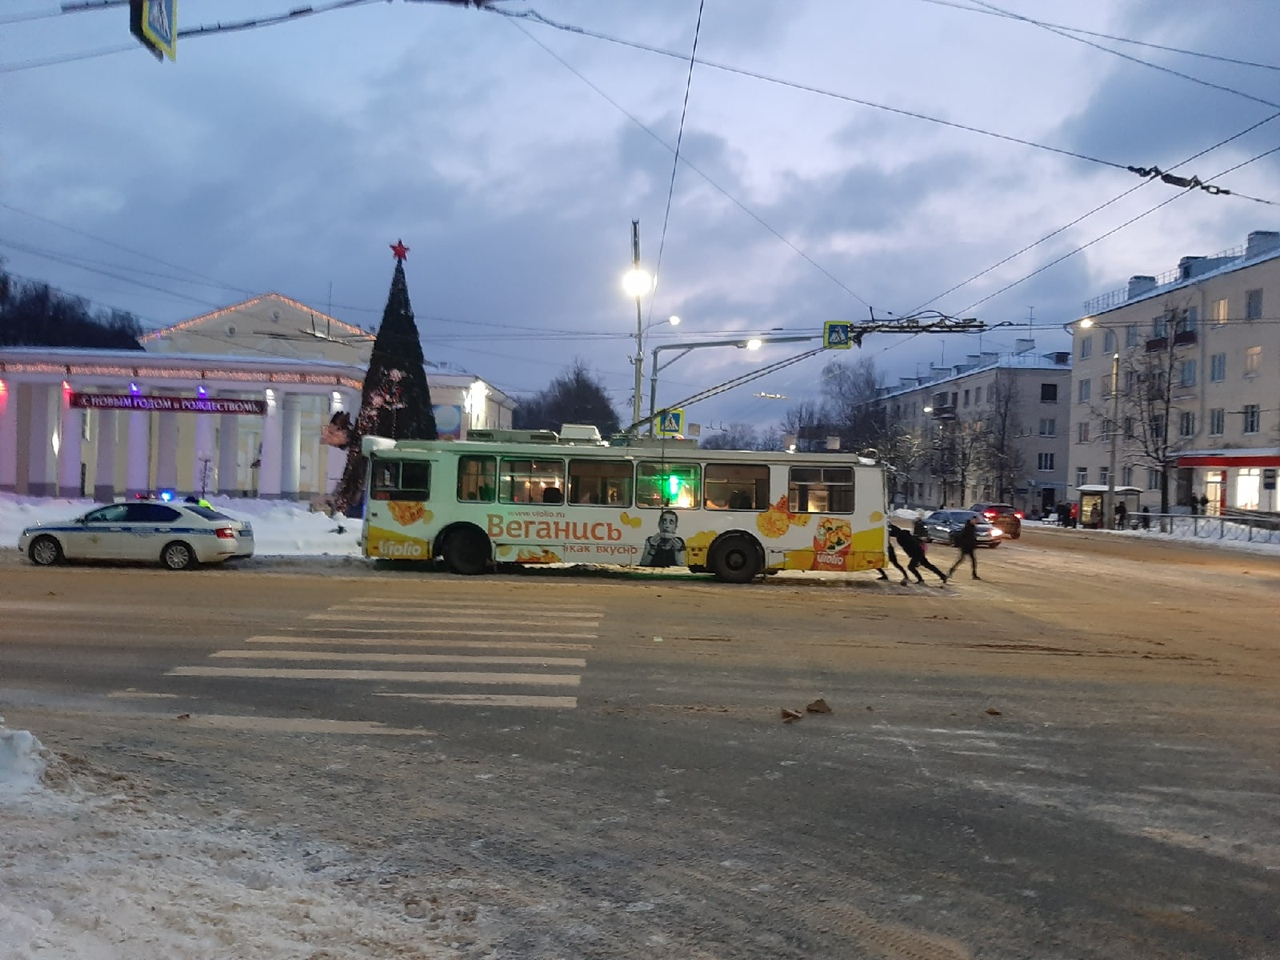 Жители Владимира вручную передвигали троллейбус